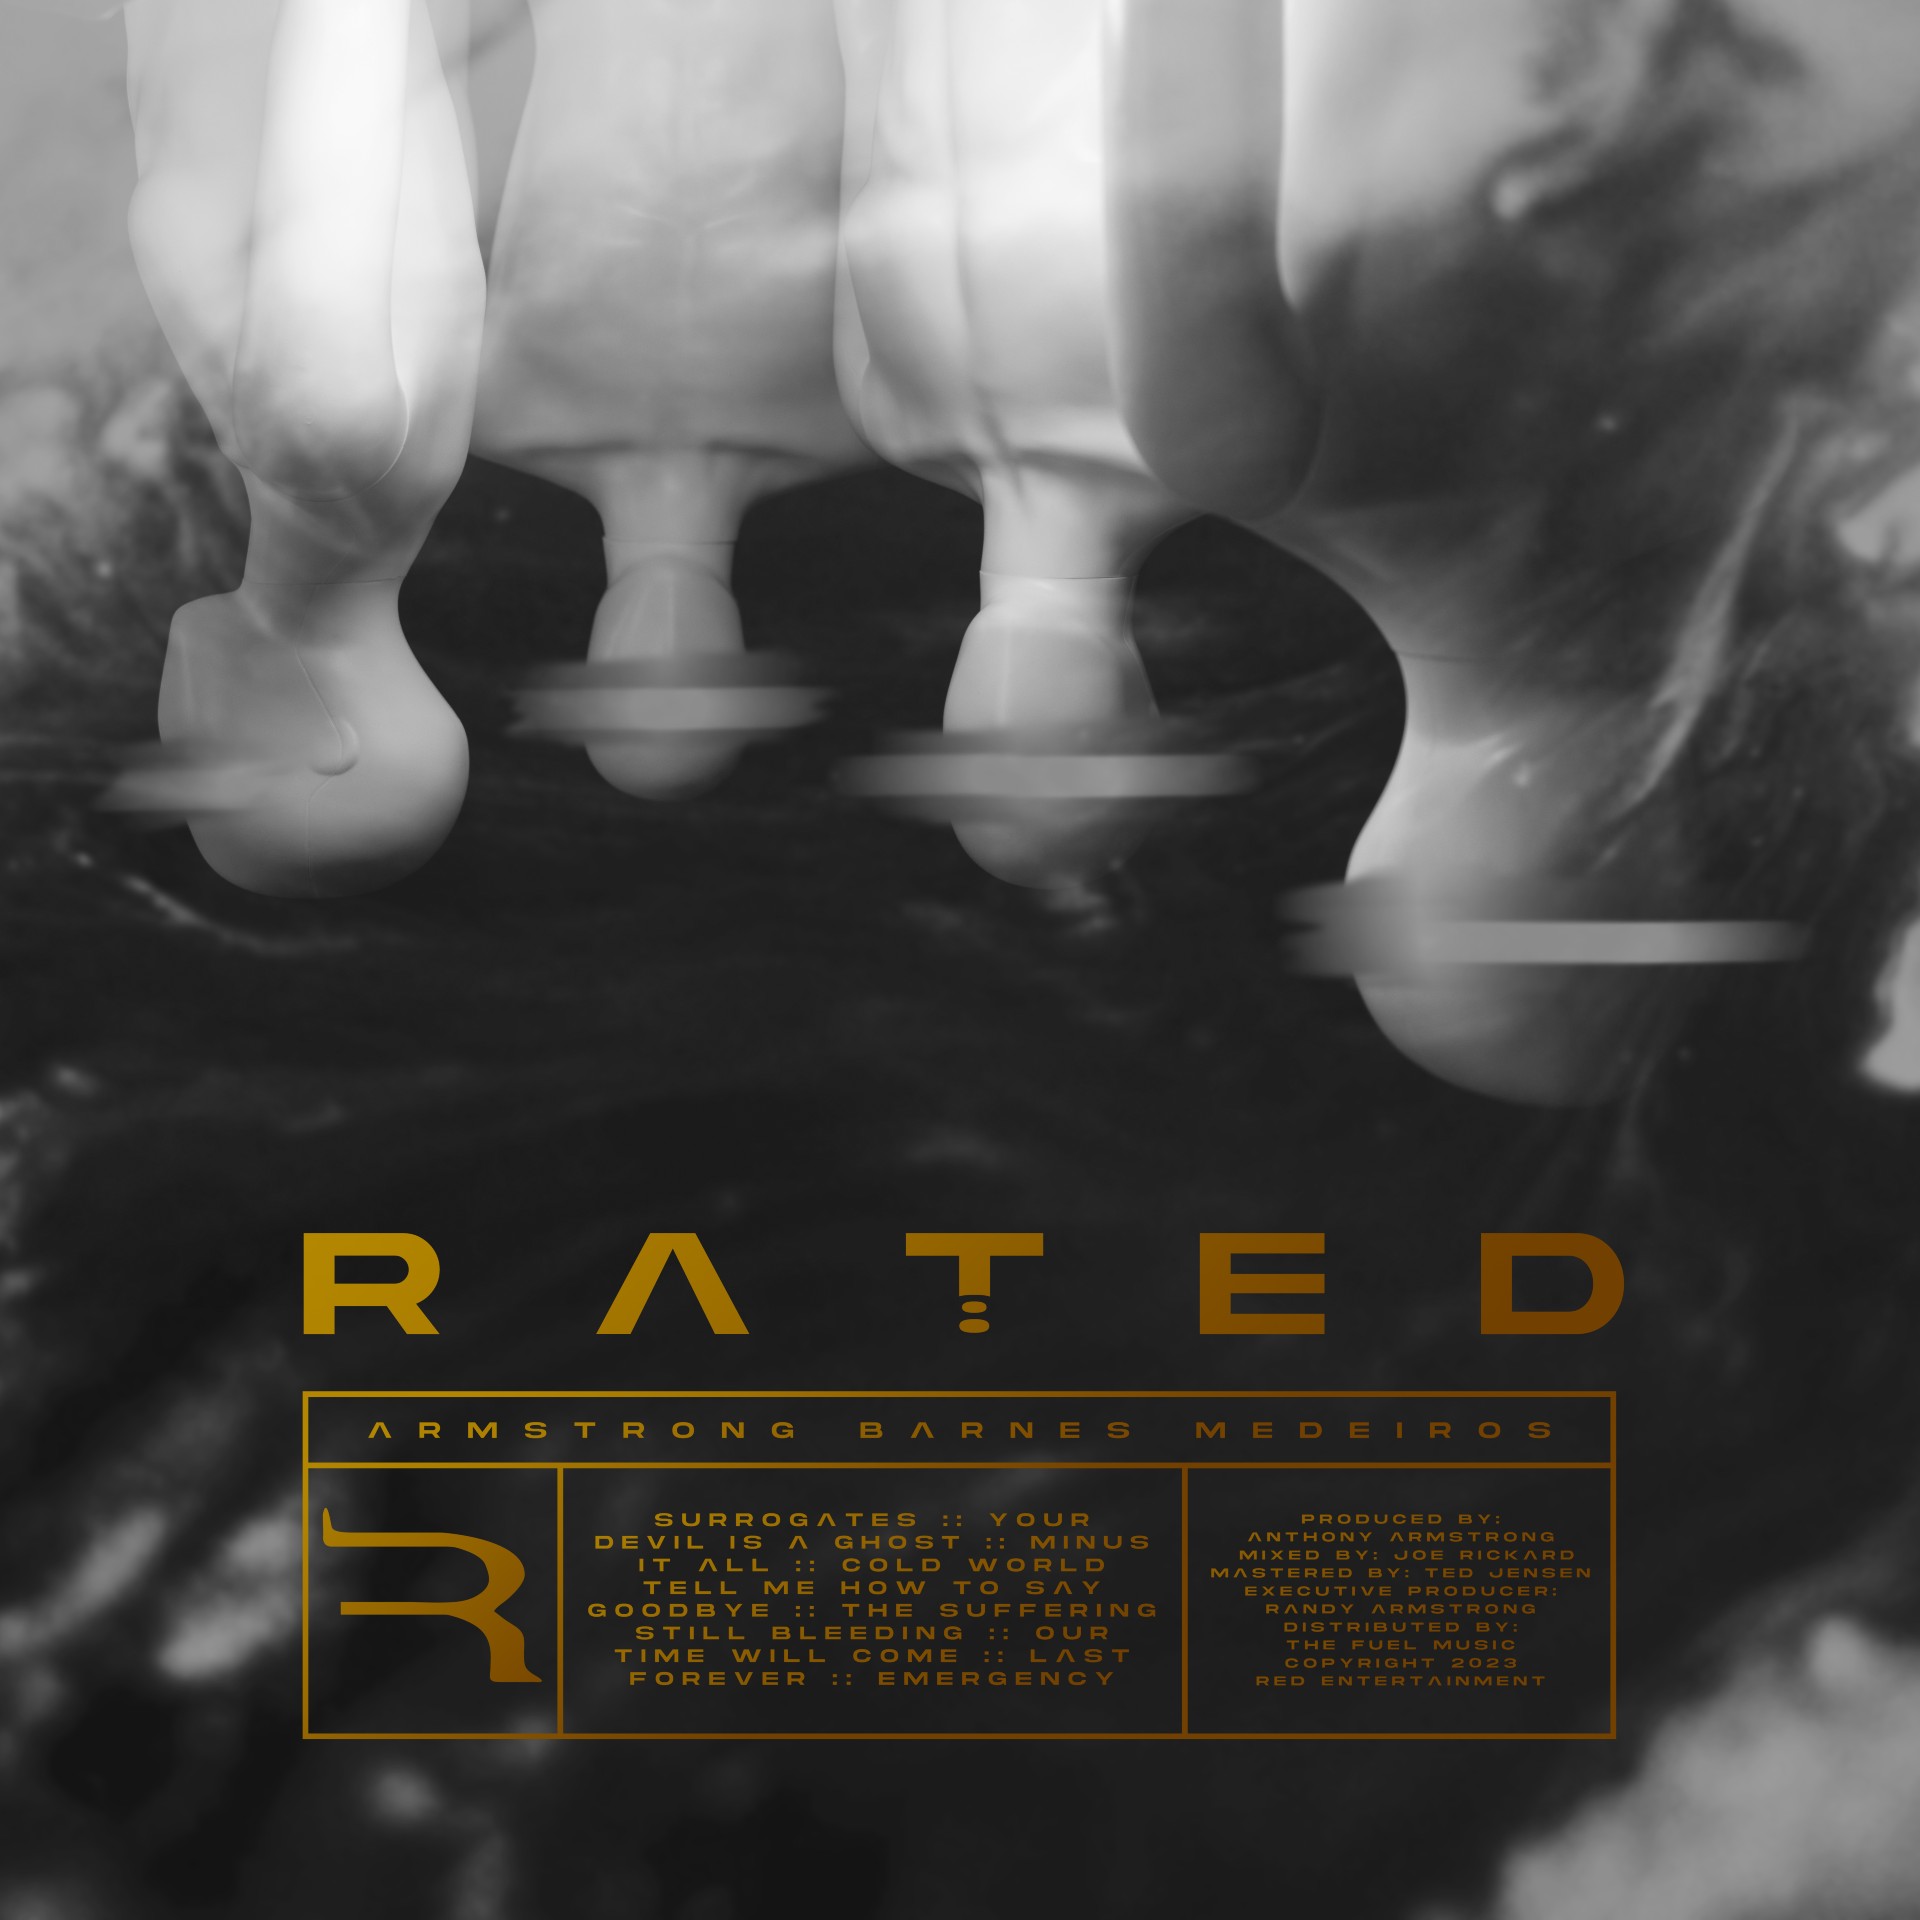 RED ‘Rated R’ album artwork